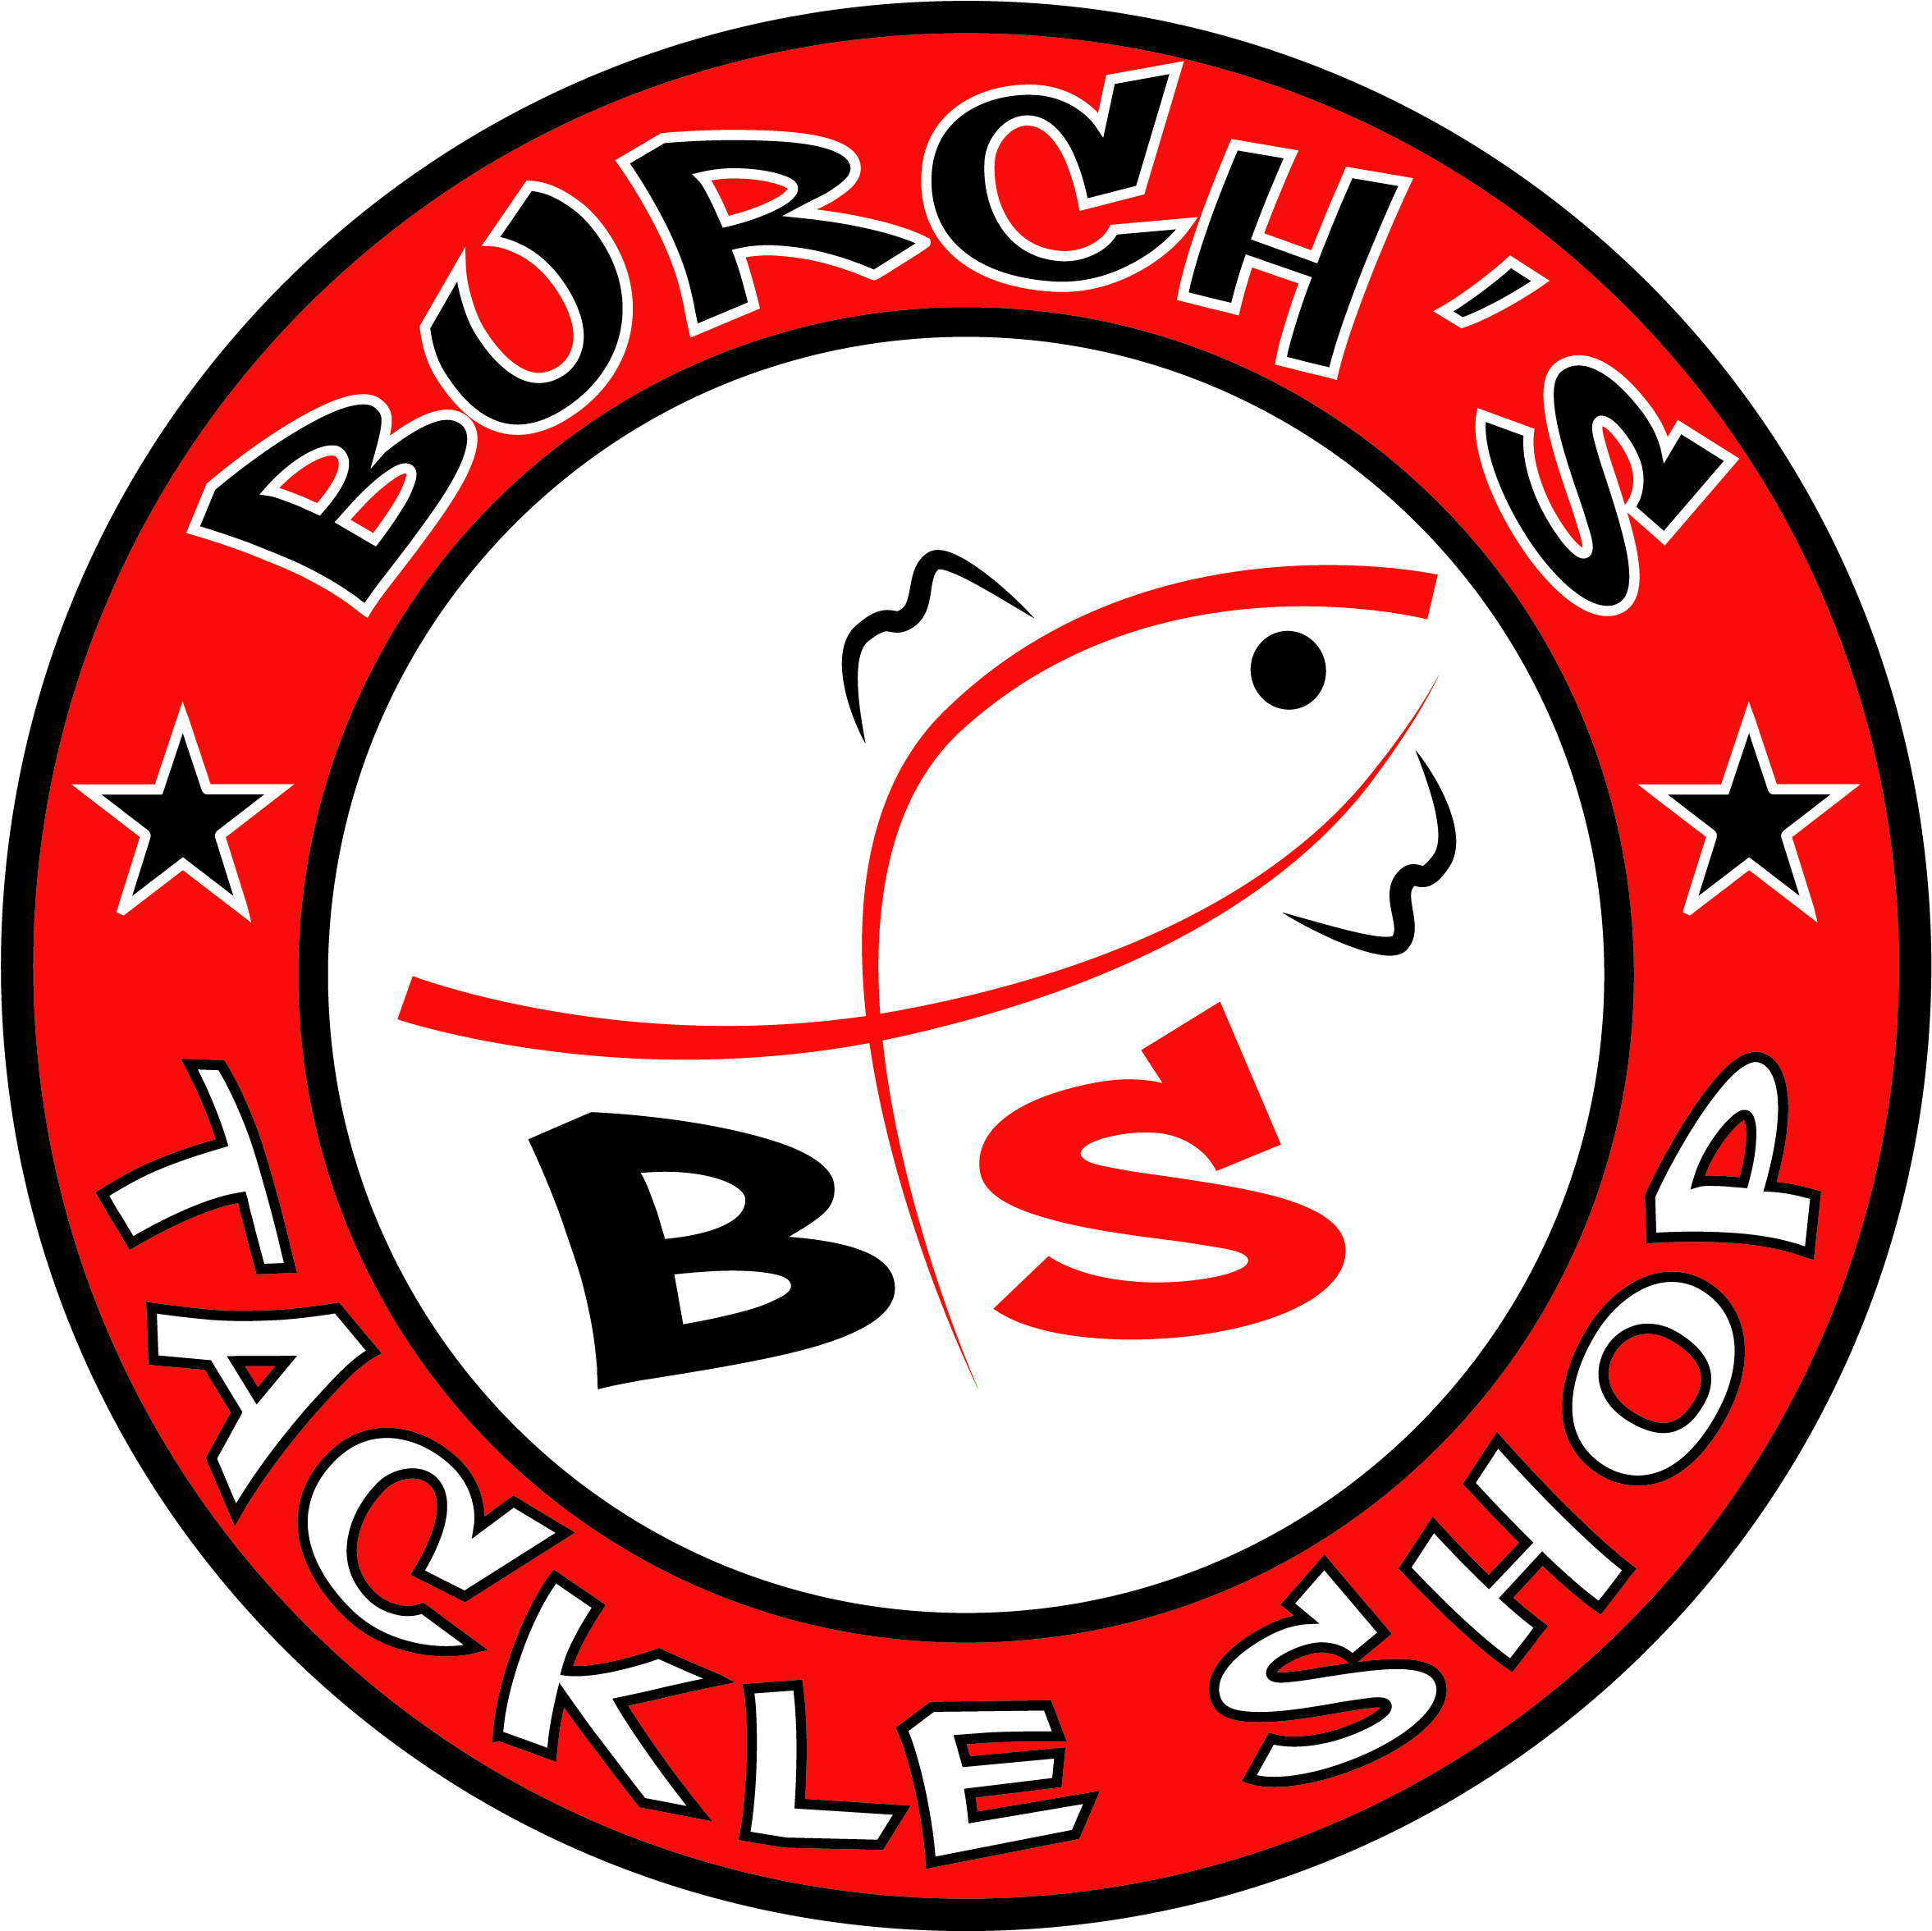 Burch's Tackle Shop - Chocolate Hsu Flags Skateboard Deck - 8.0" (2500x2500)